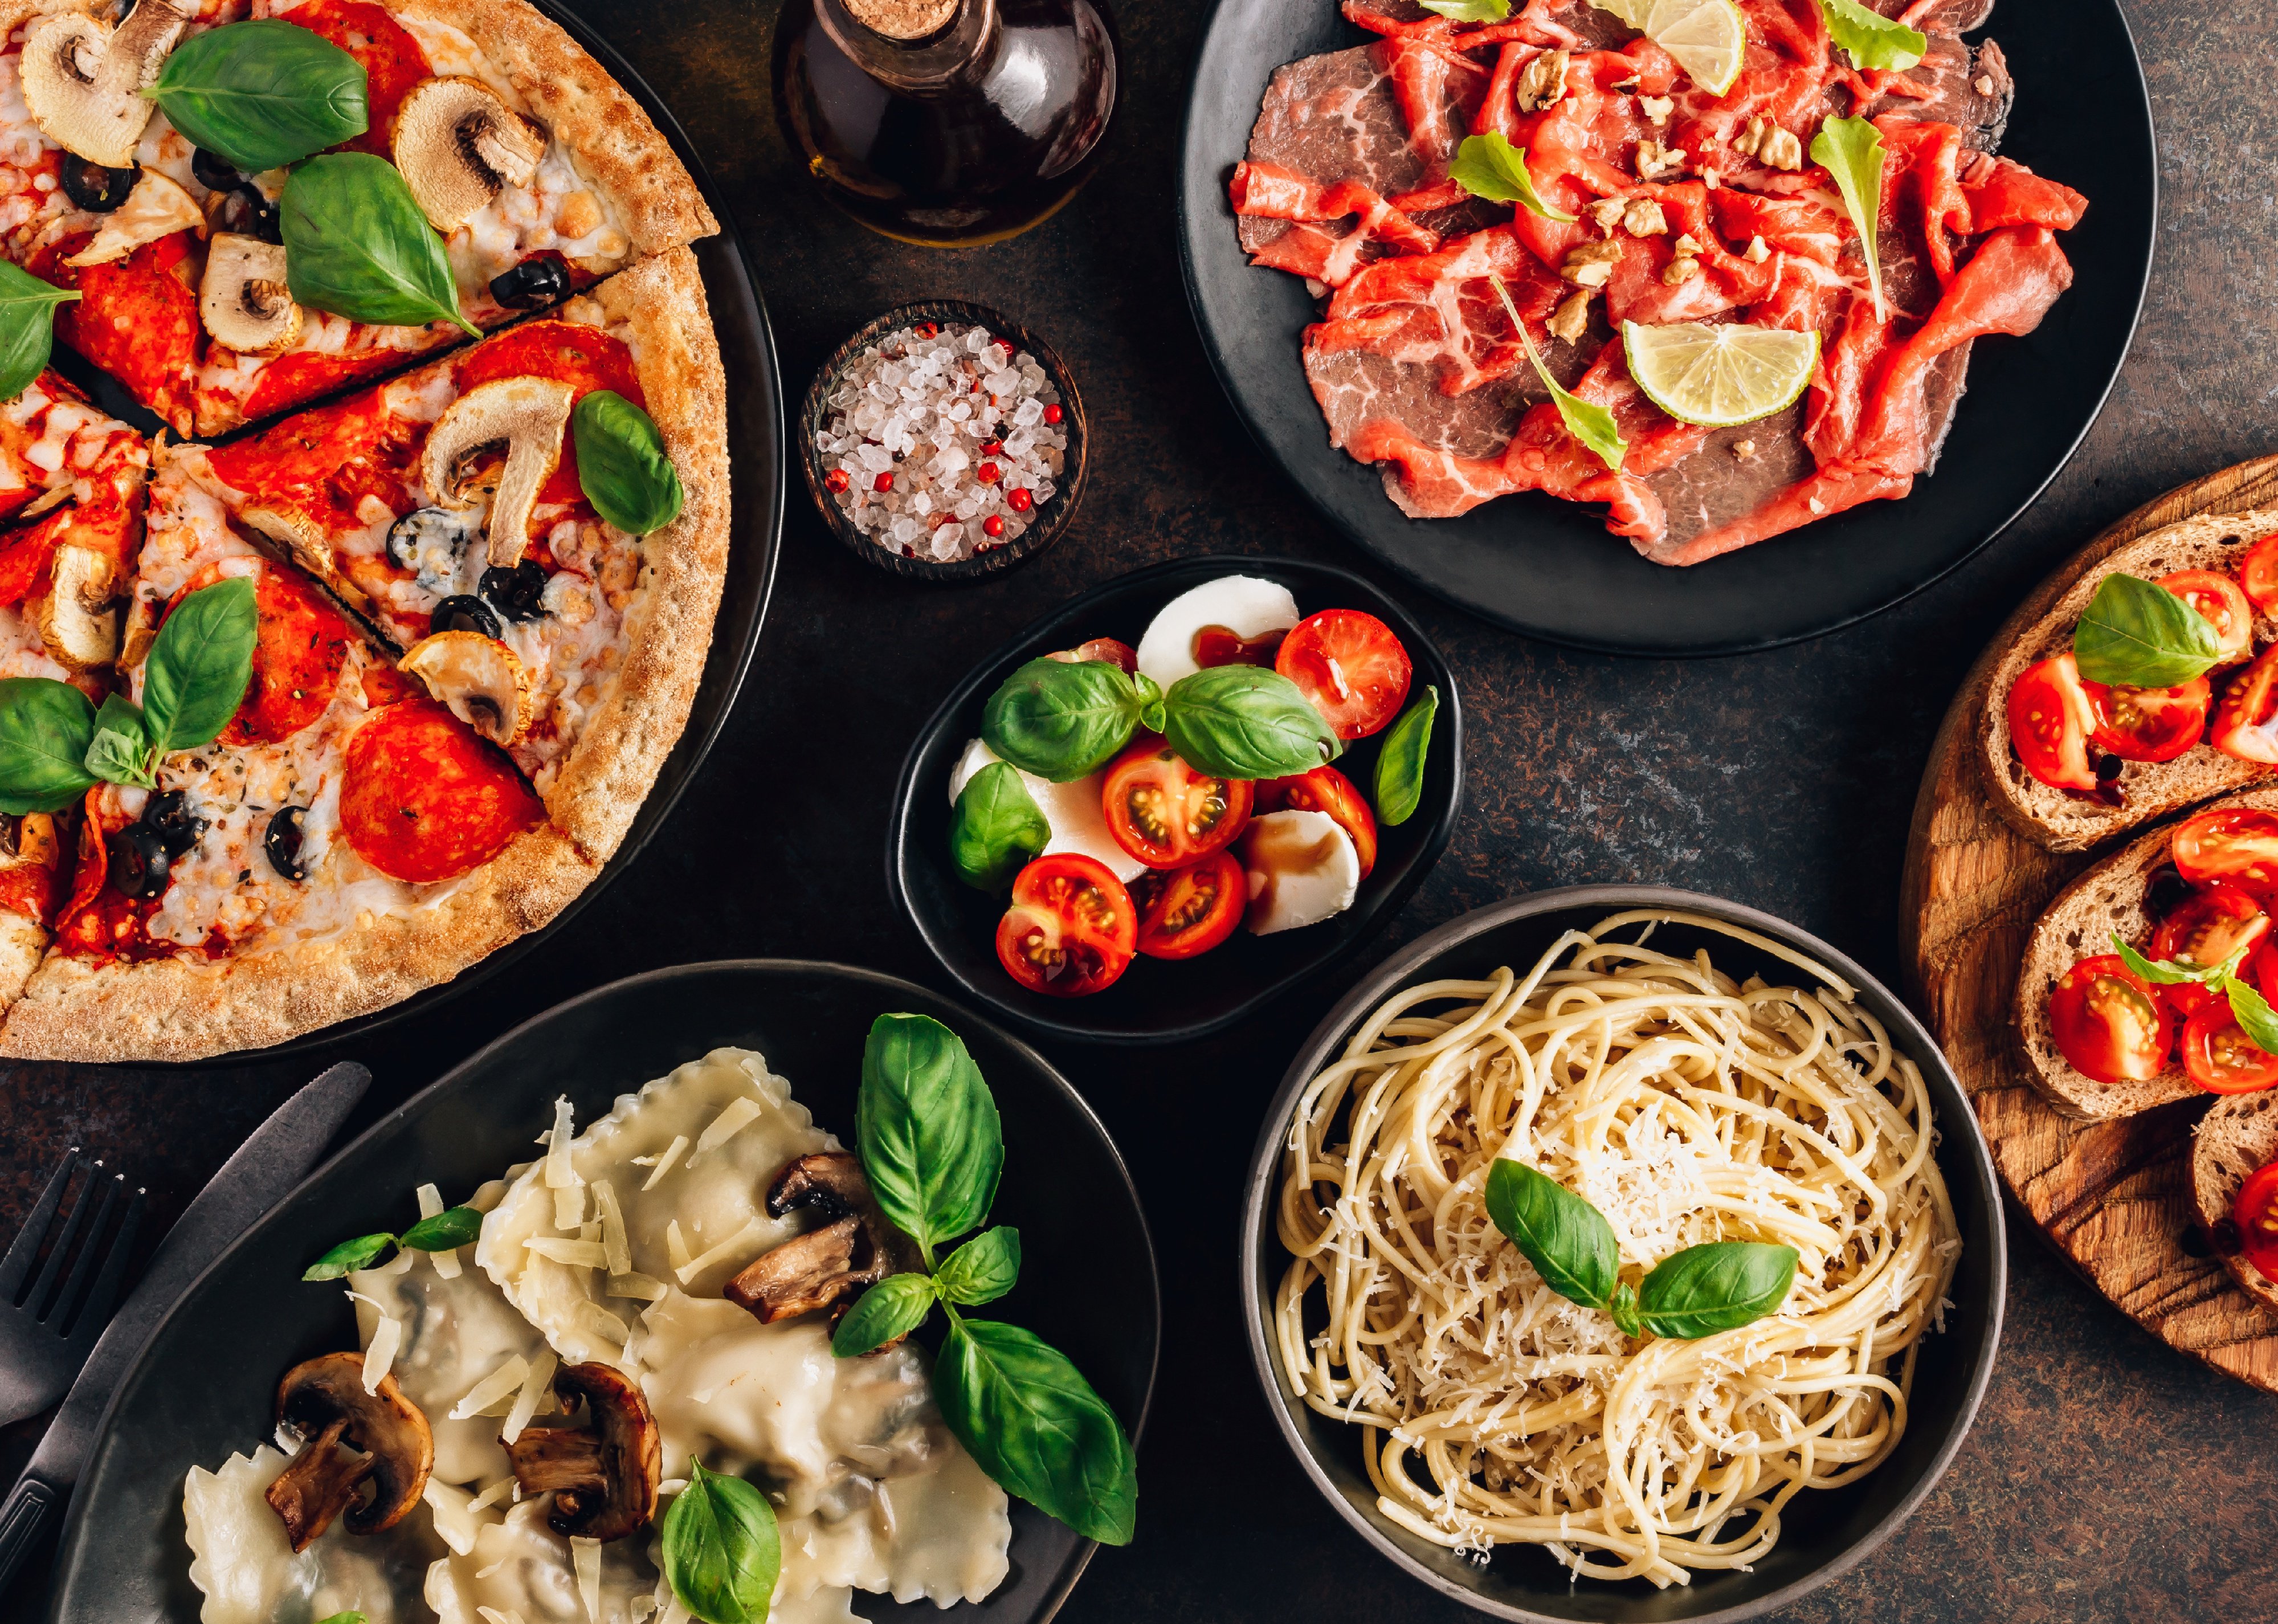 Highest-rated Italian restaurants in Duluth, according to Tripadvisor